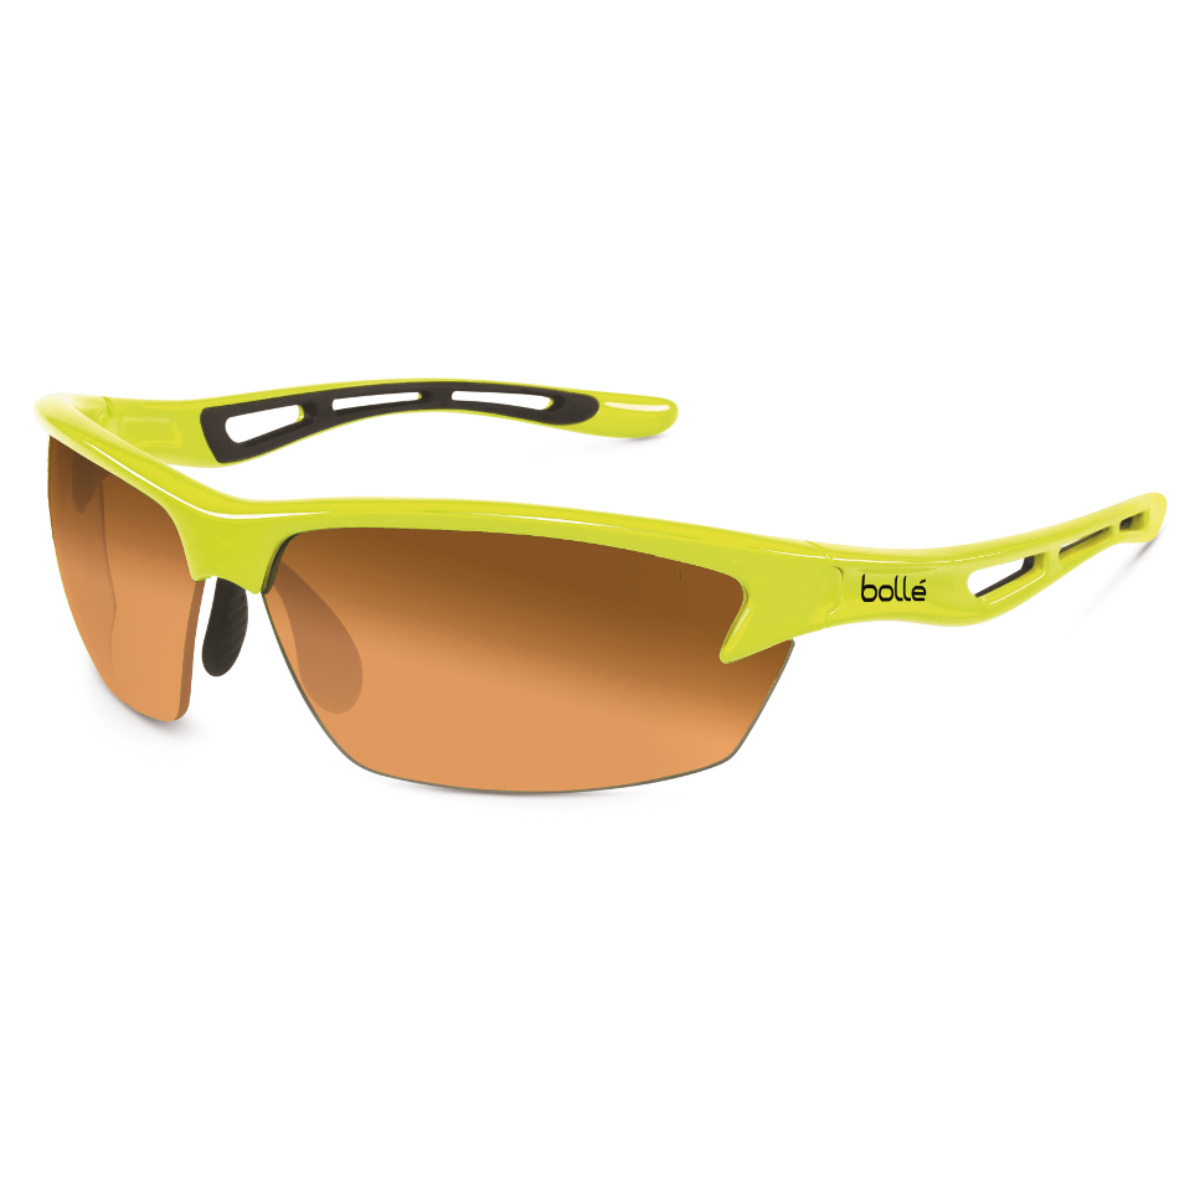 Bolt 12014 Sunglasses Neon Yellow - image 1 of 2